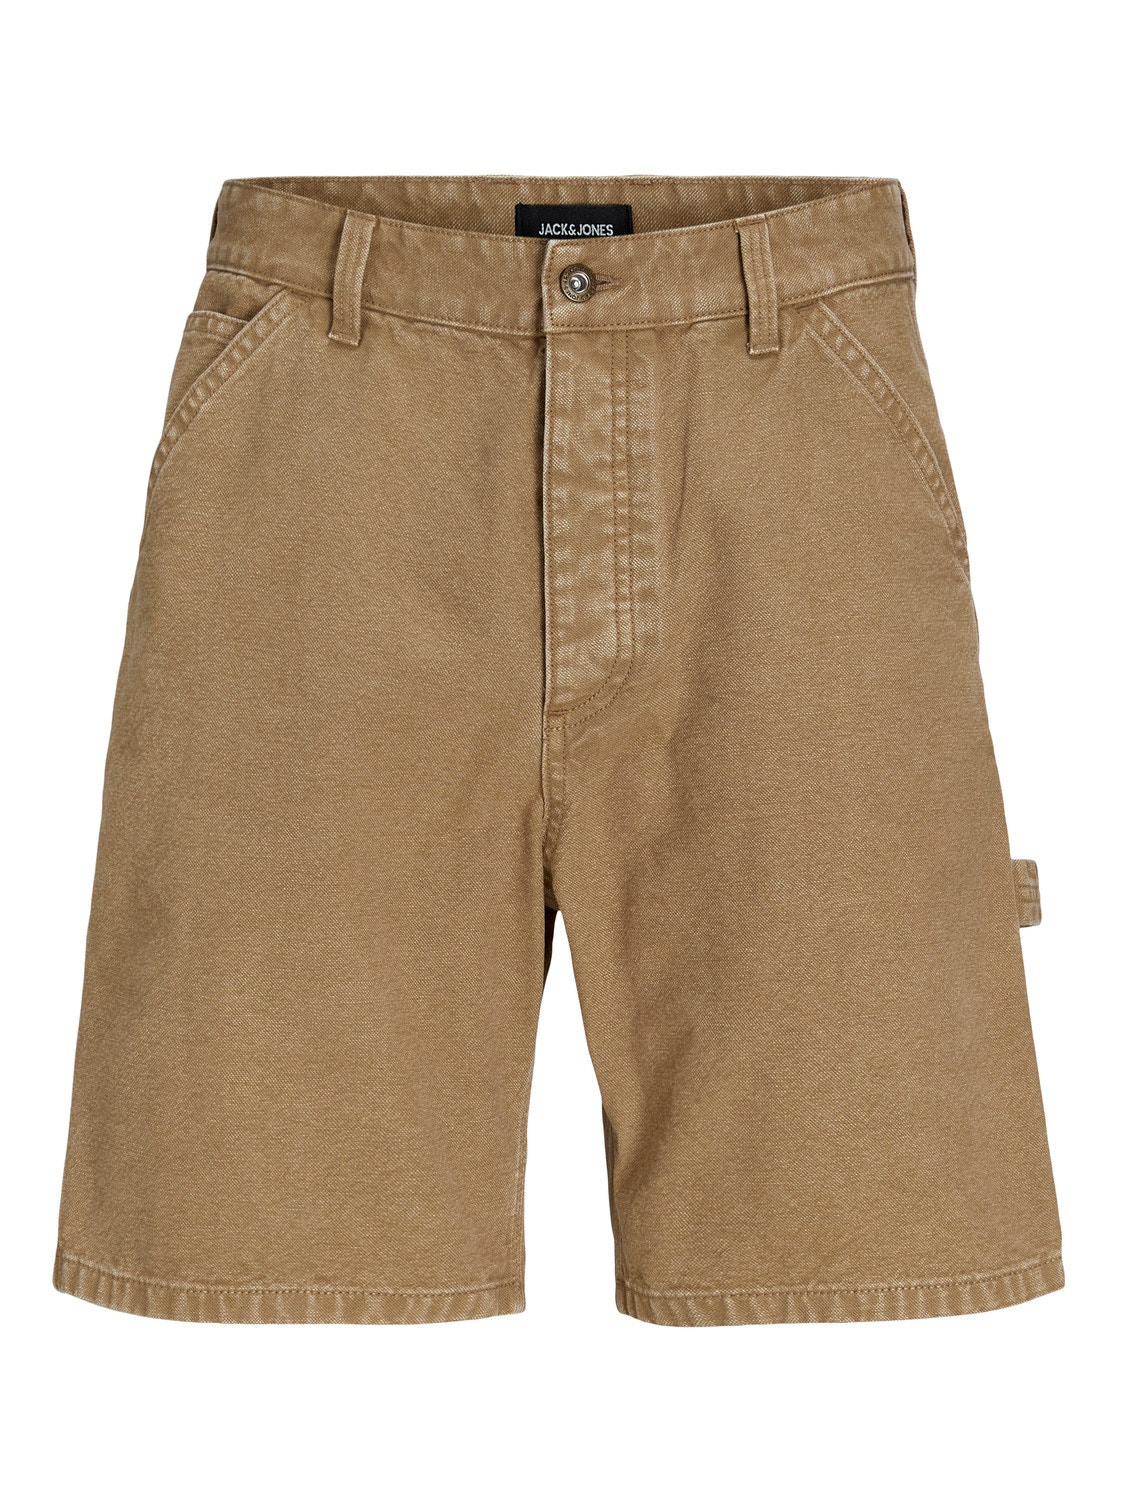 Jack & Jones Loose Fit Jeans Shorts -Tigers Eye - 12252814